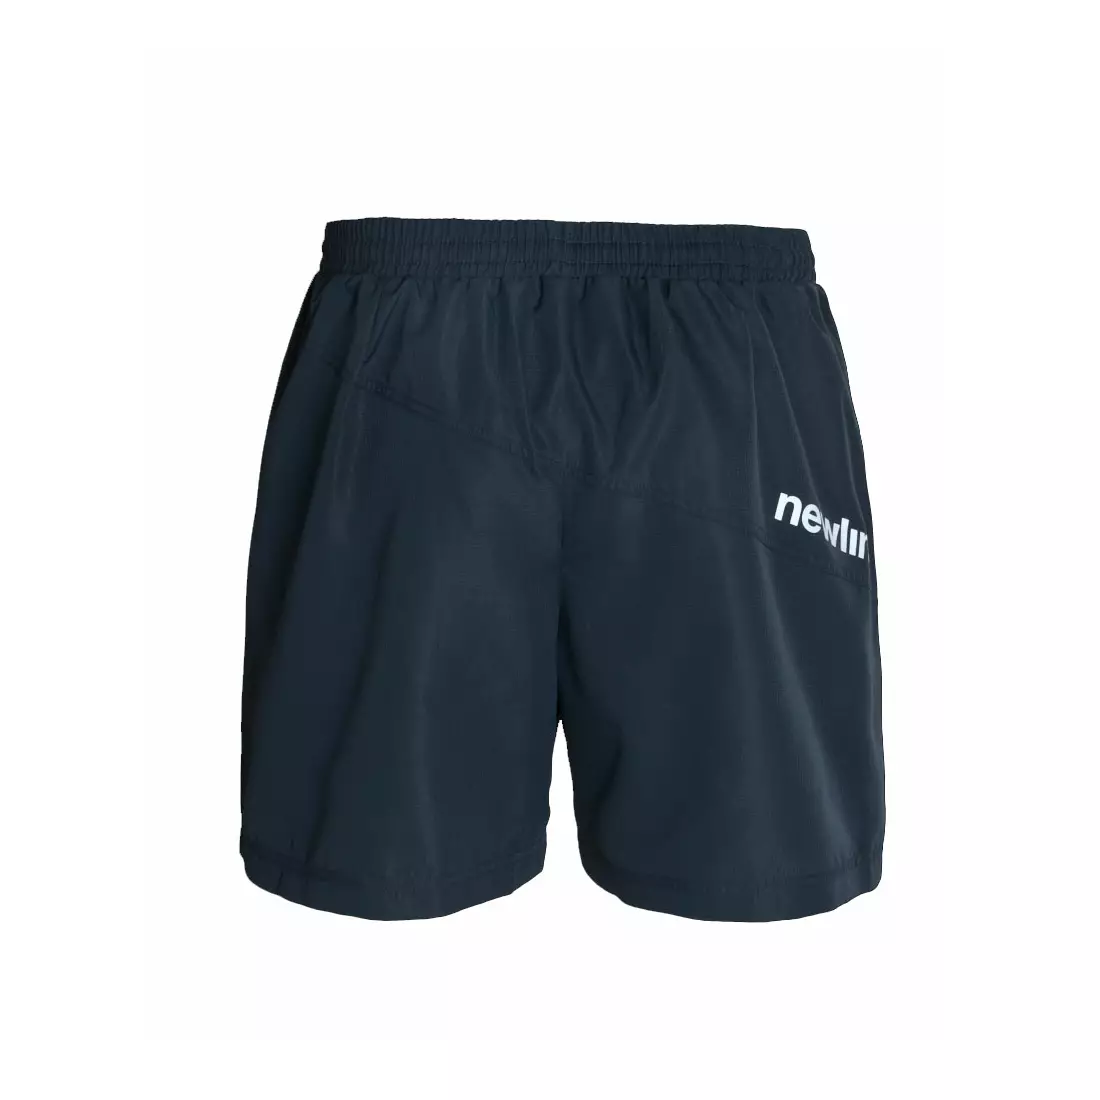 NEWLINE IMOTION 2 LAY shorts - men's running shorts 11744-275